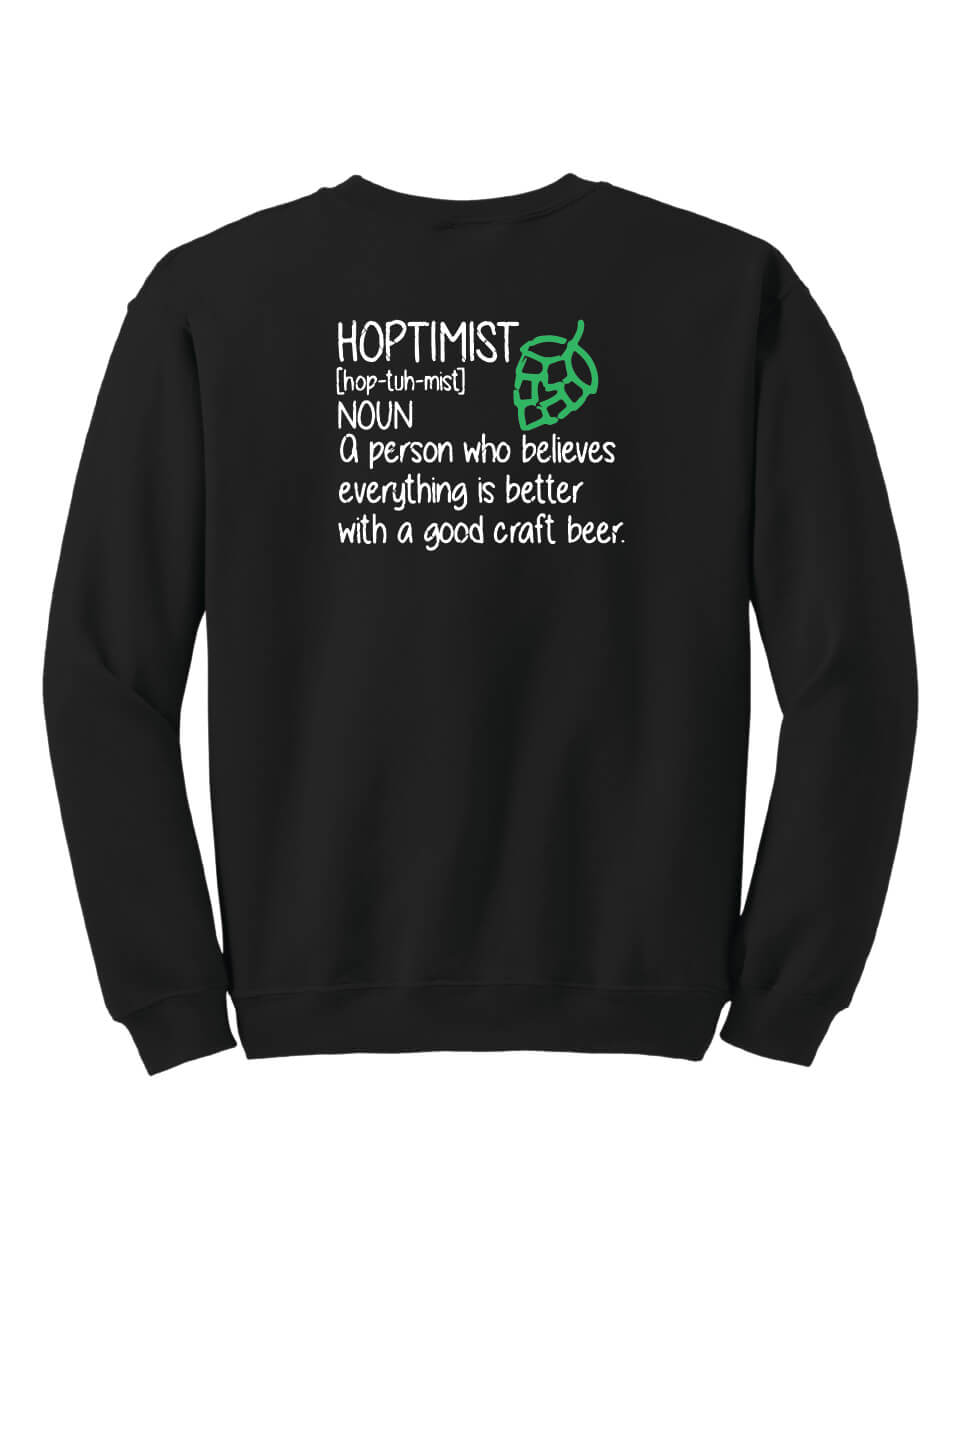 Hoptimist crewneck sweatshirt back